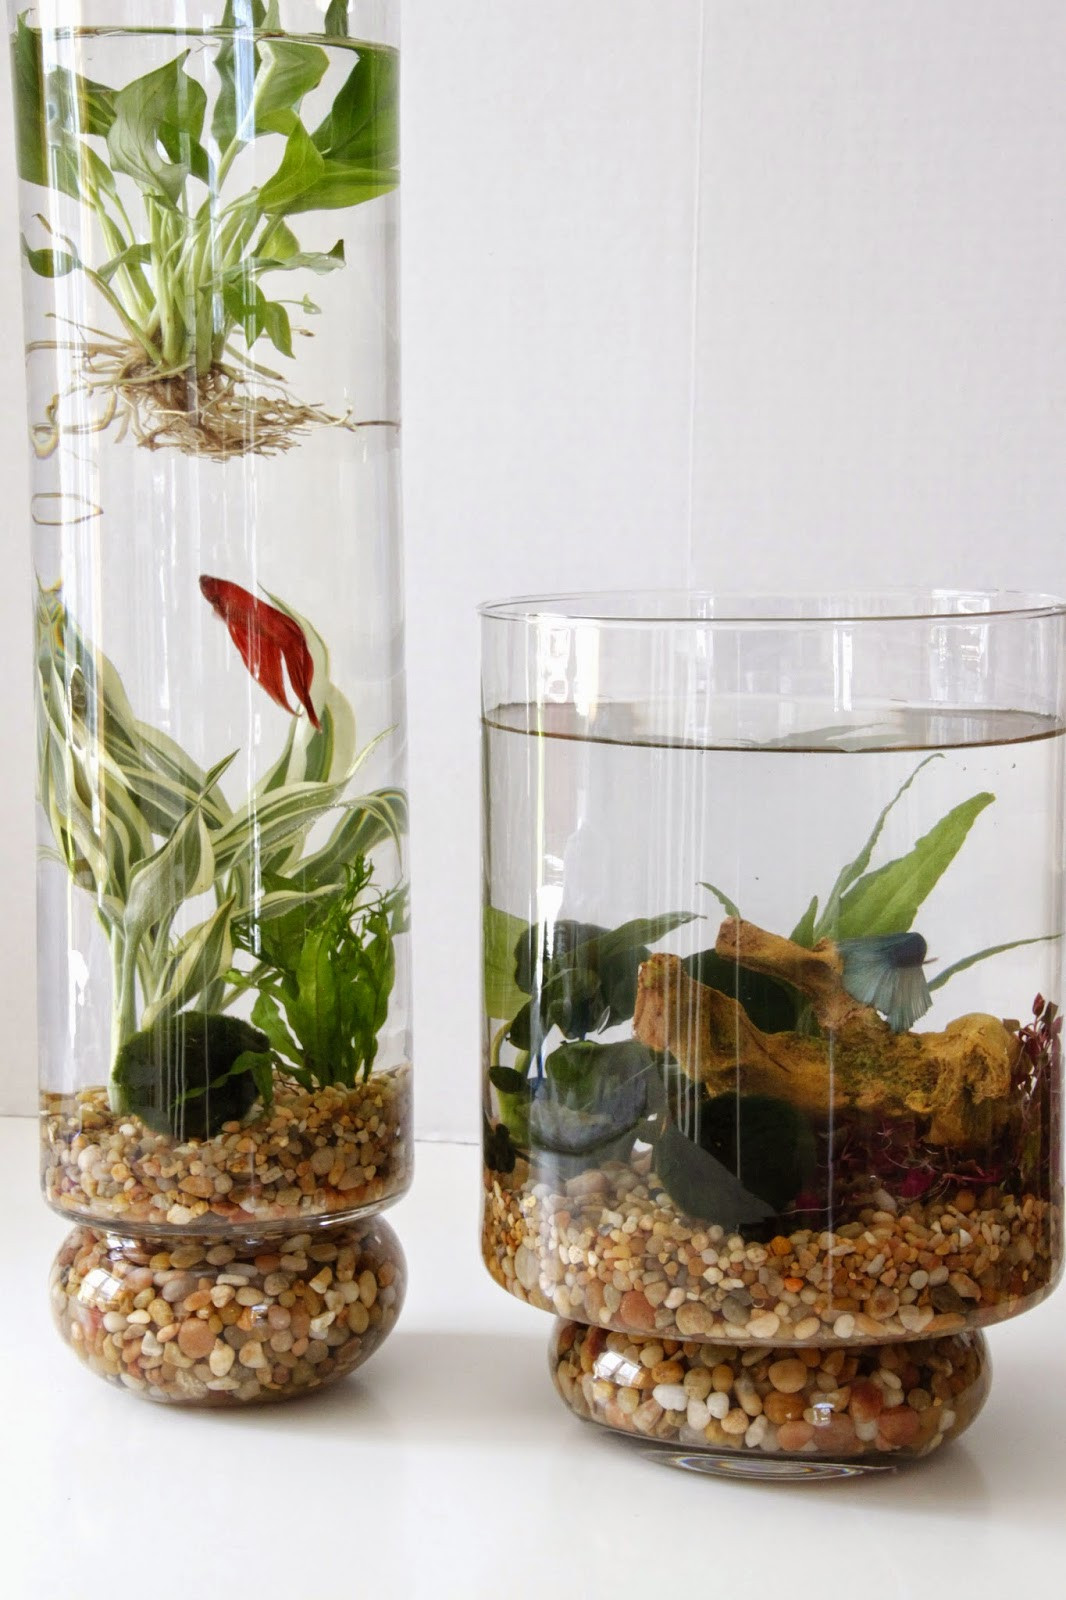 Best ideas about DIY Water Gardens
. Save or Pin DIY Indoor Water Garden Tilly s Nest Now.